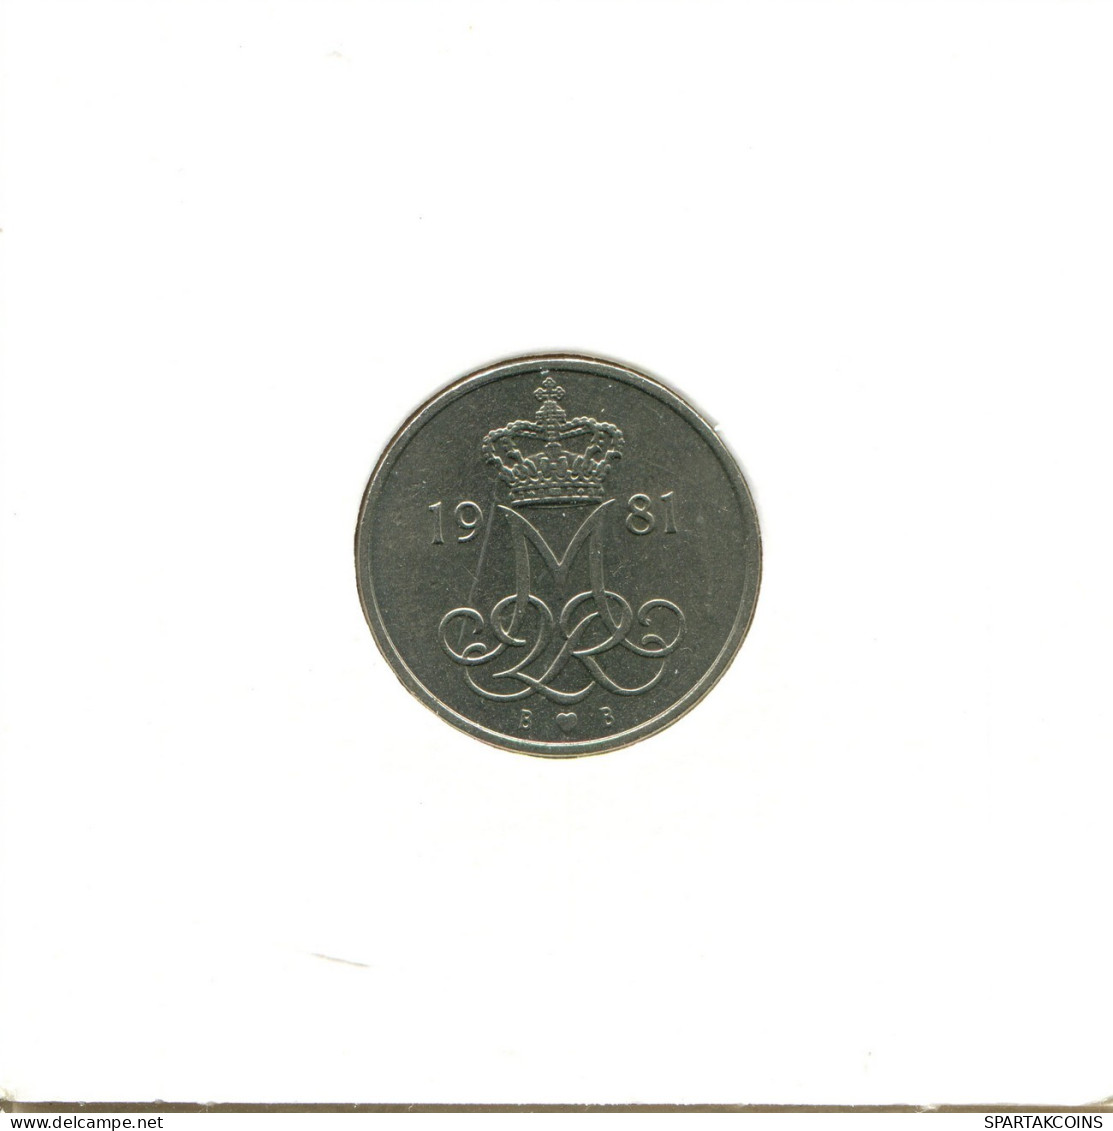 10 ORE 1981 DENMARK Coin Margrethe II #AX509.U.A - Danemark